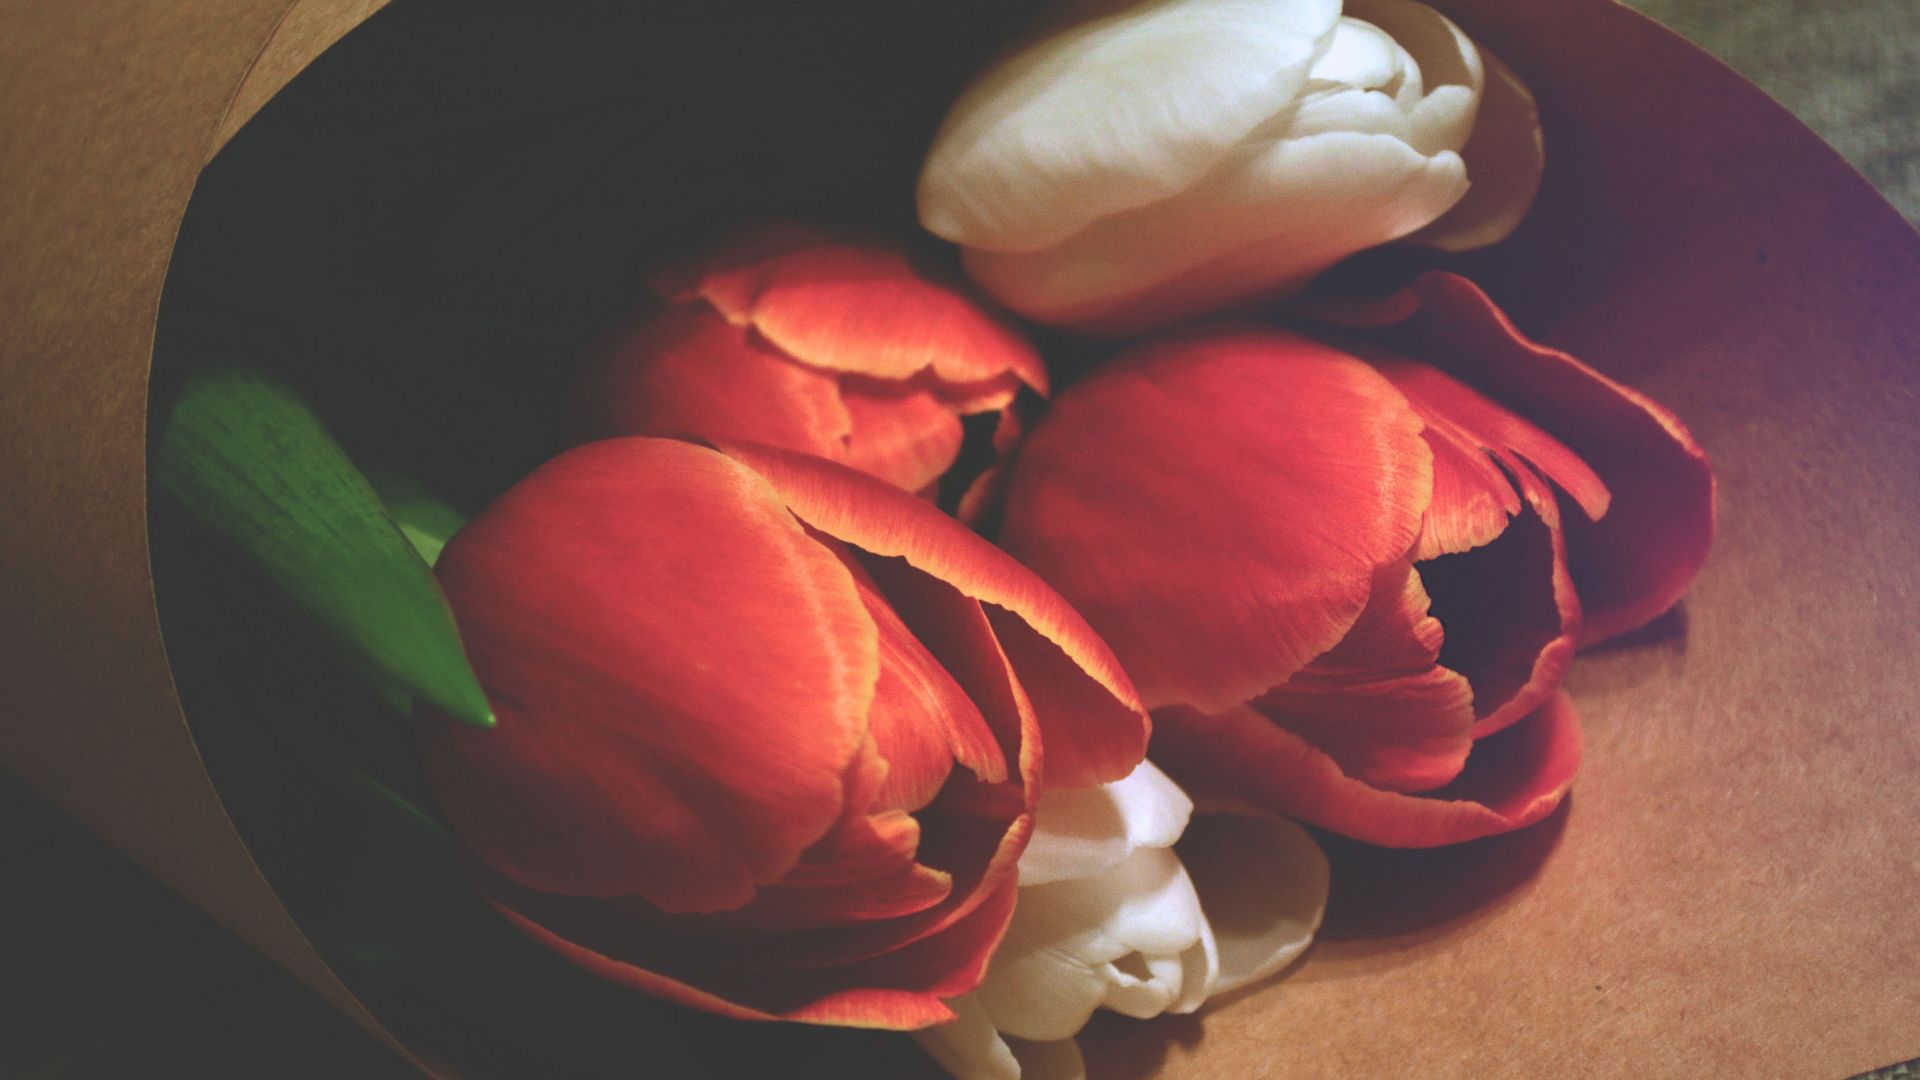 фото любовь, цветы, love image, tulips, 4k (horizontal)